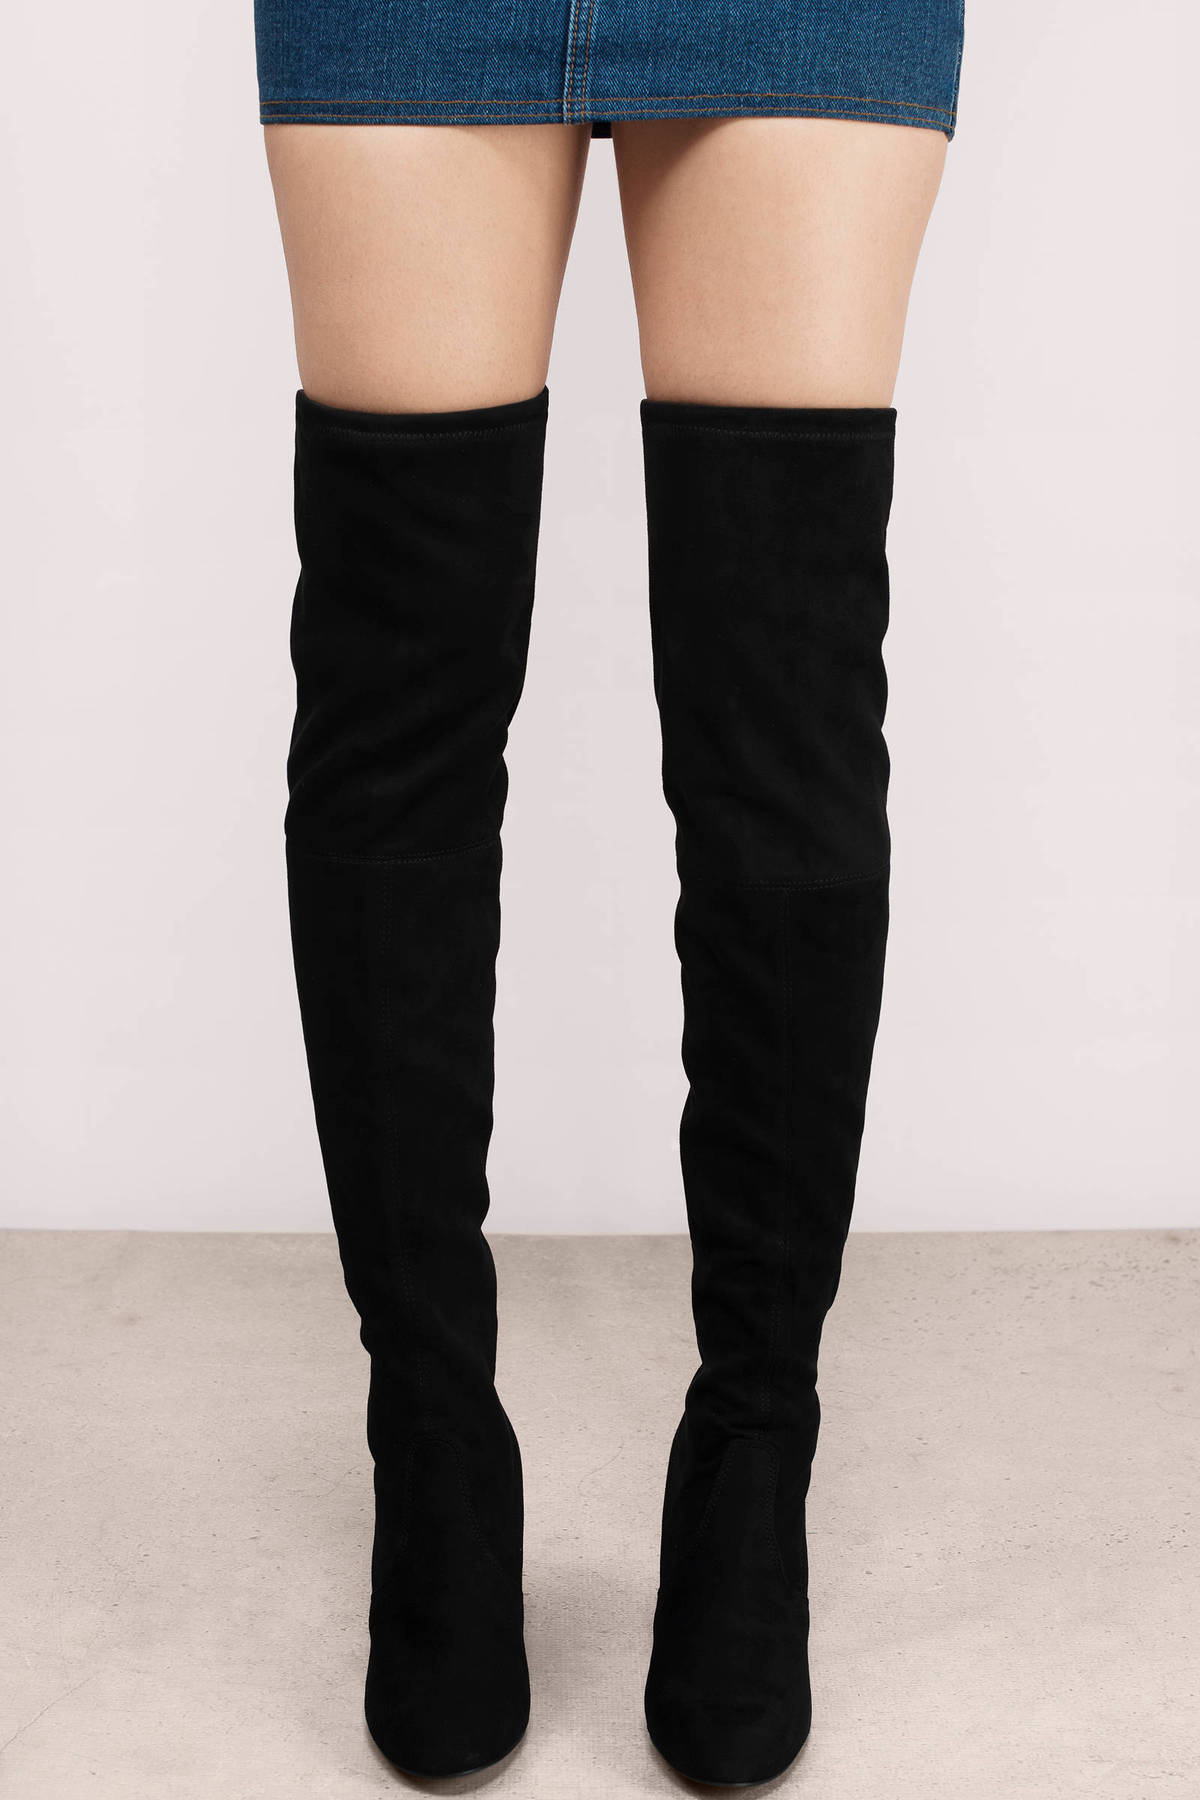 Norri Suede Knee High Boots in Black - $65 | Tobi US